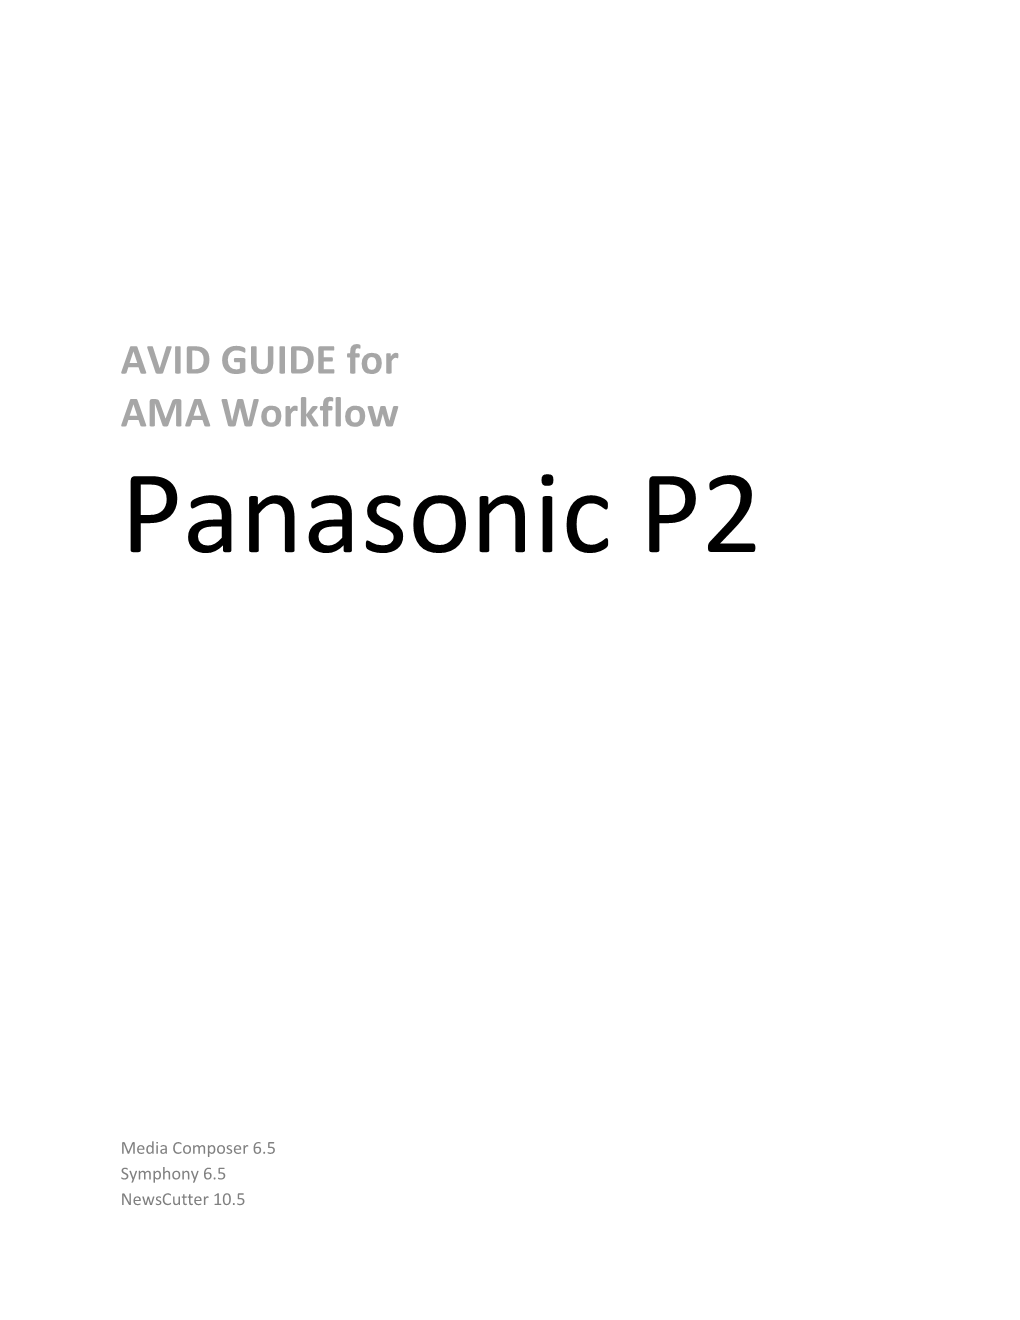 AVID GUIDE for AMA Workflow Panasonic P2